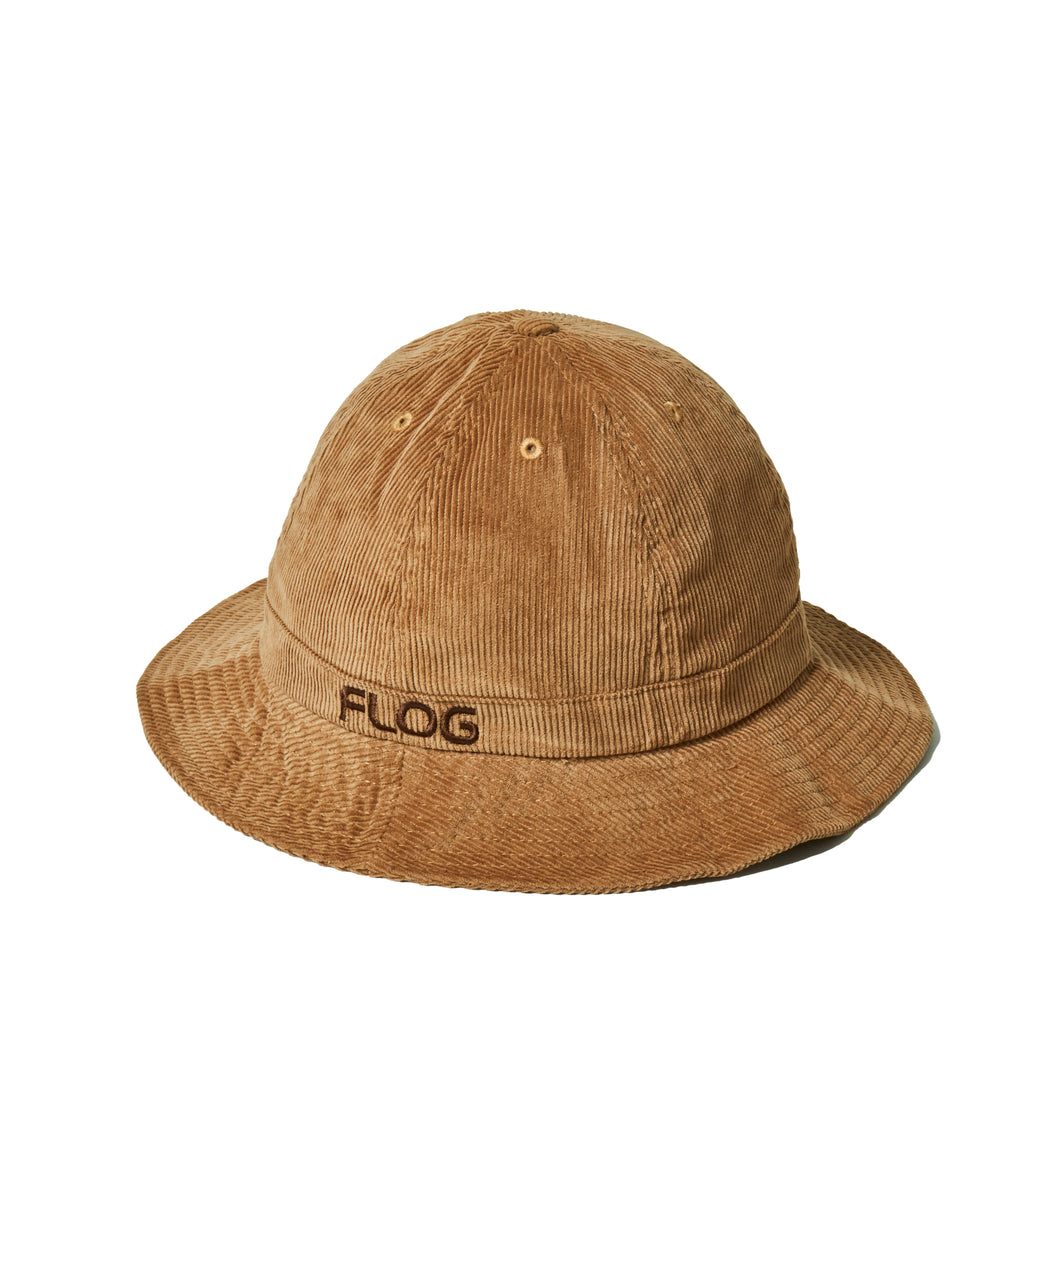 FLOG crew hat